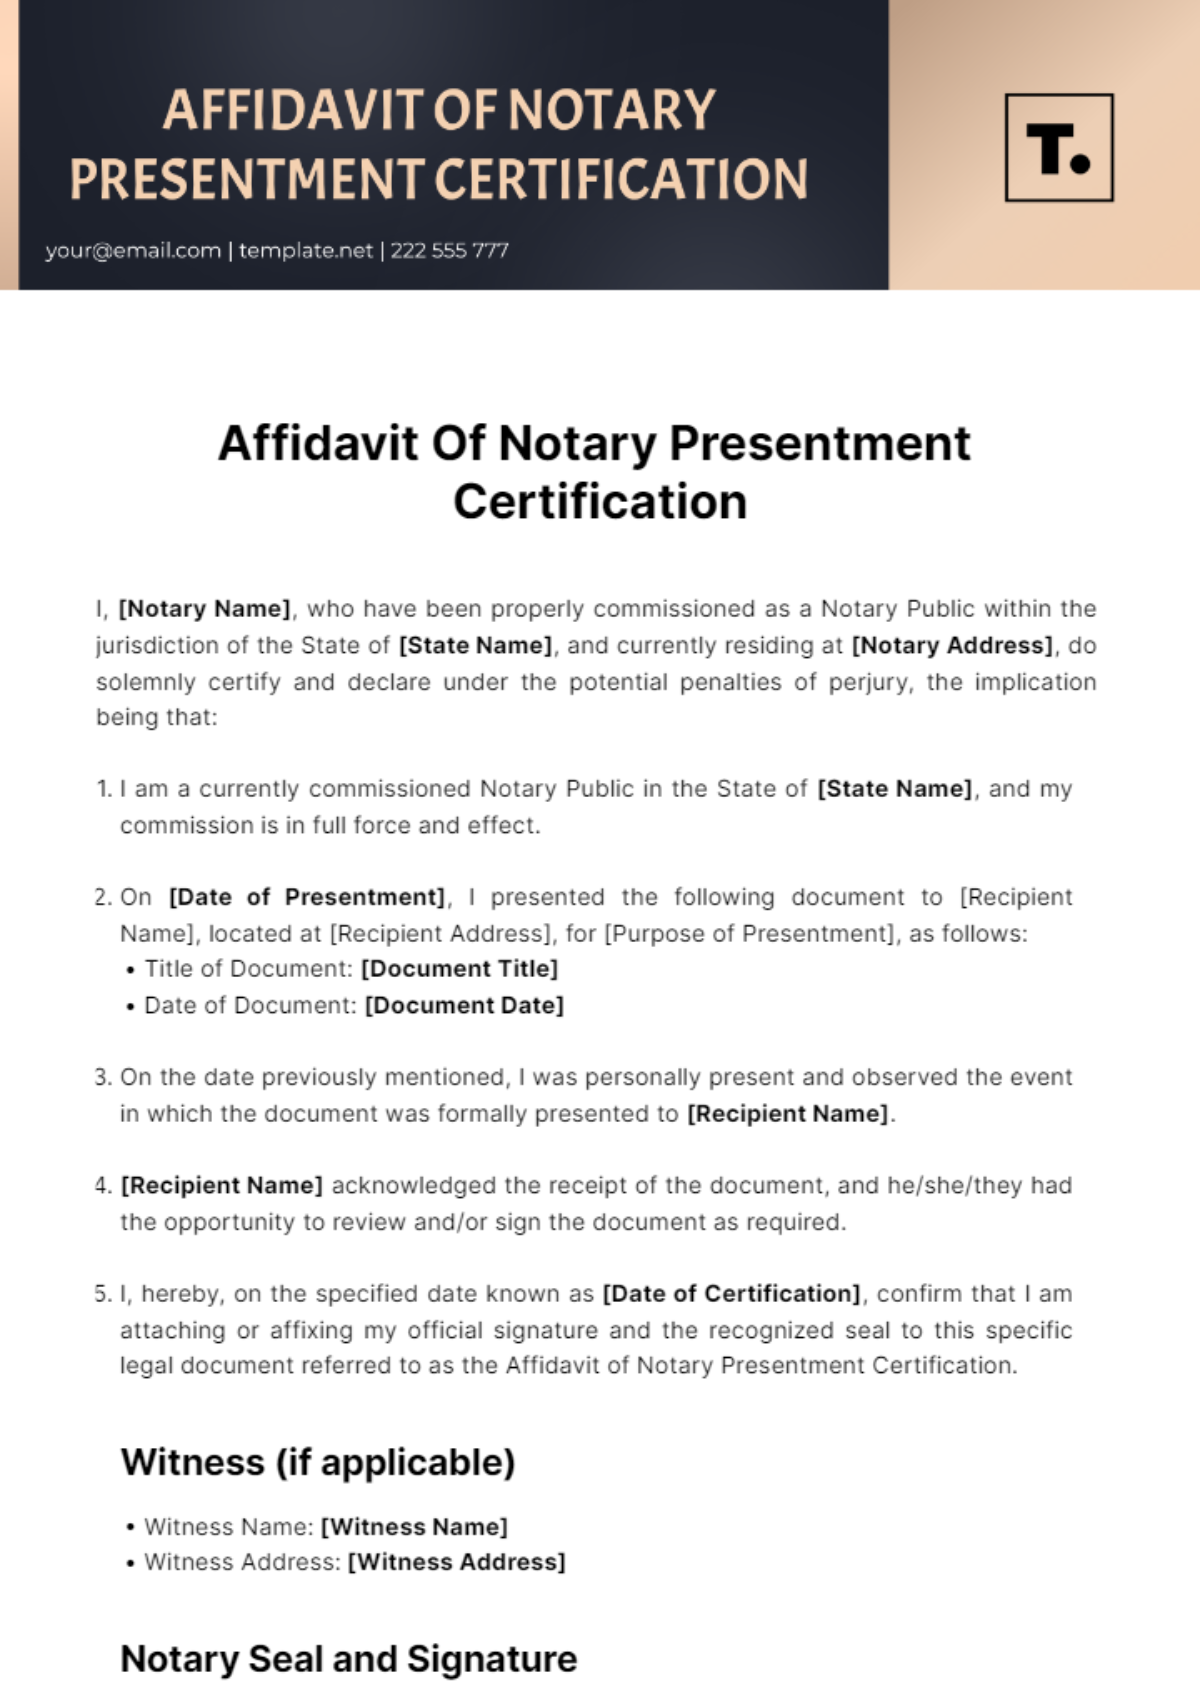 Affidavit Of Notary Presentment Certification Template